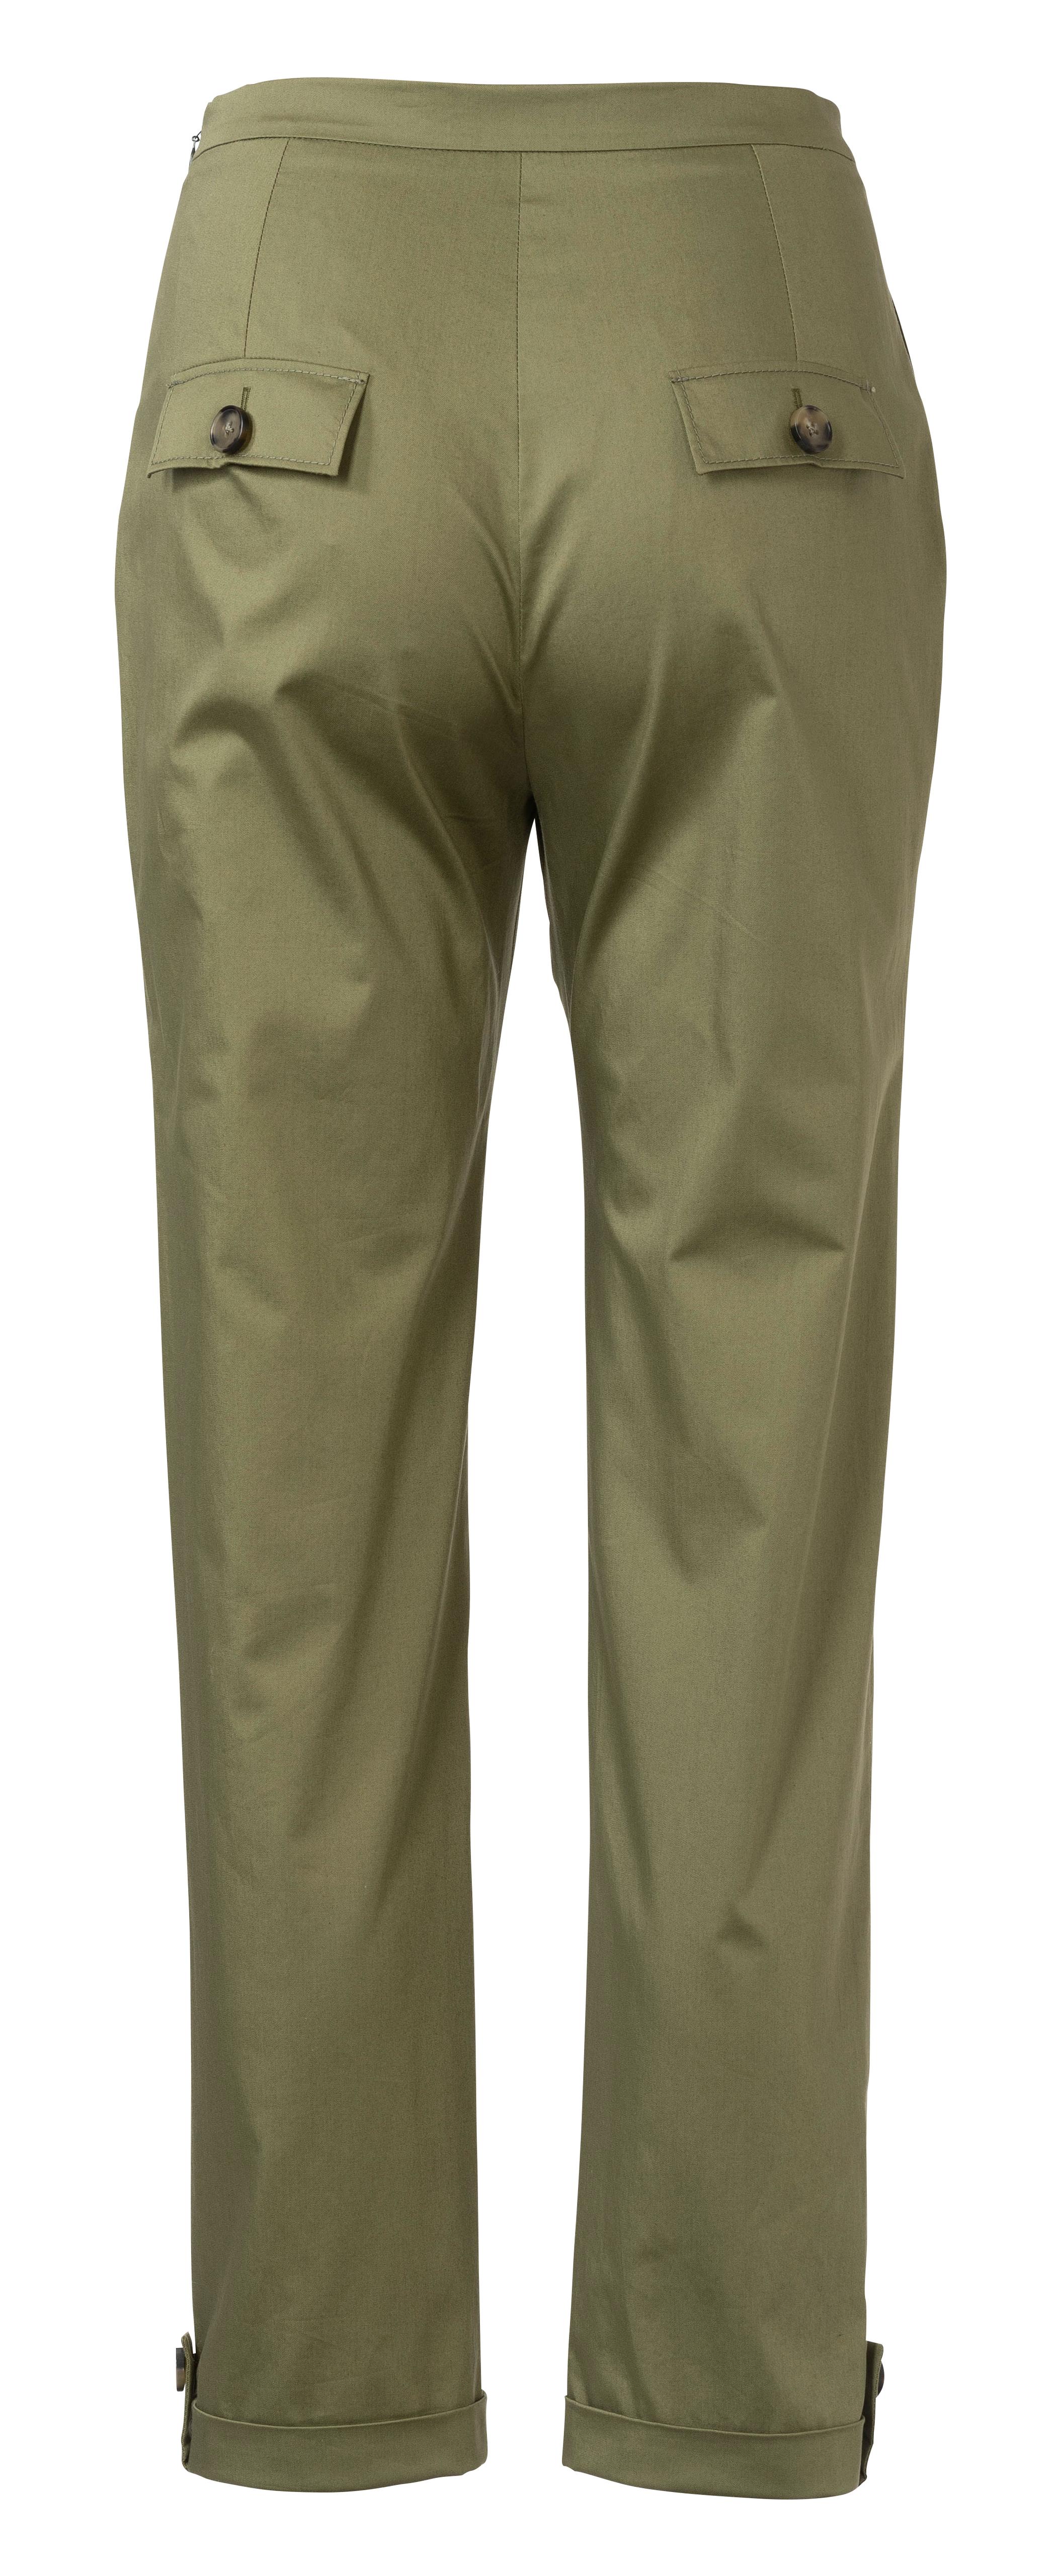 Burda B6242 Trousers/Pants with Side Zip Fastening Sewing Pattern